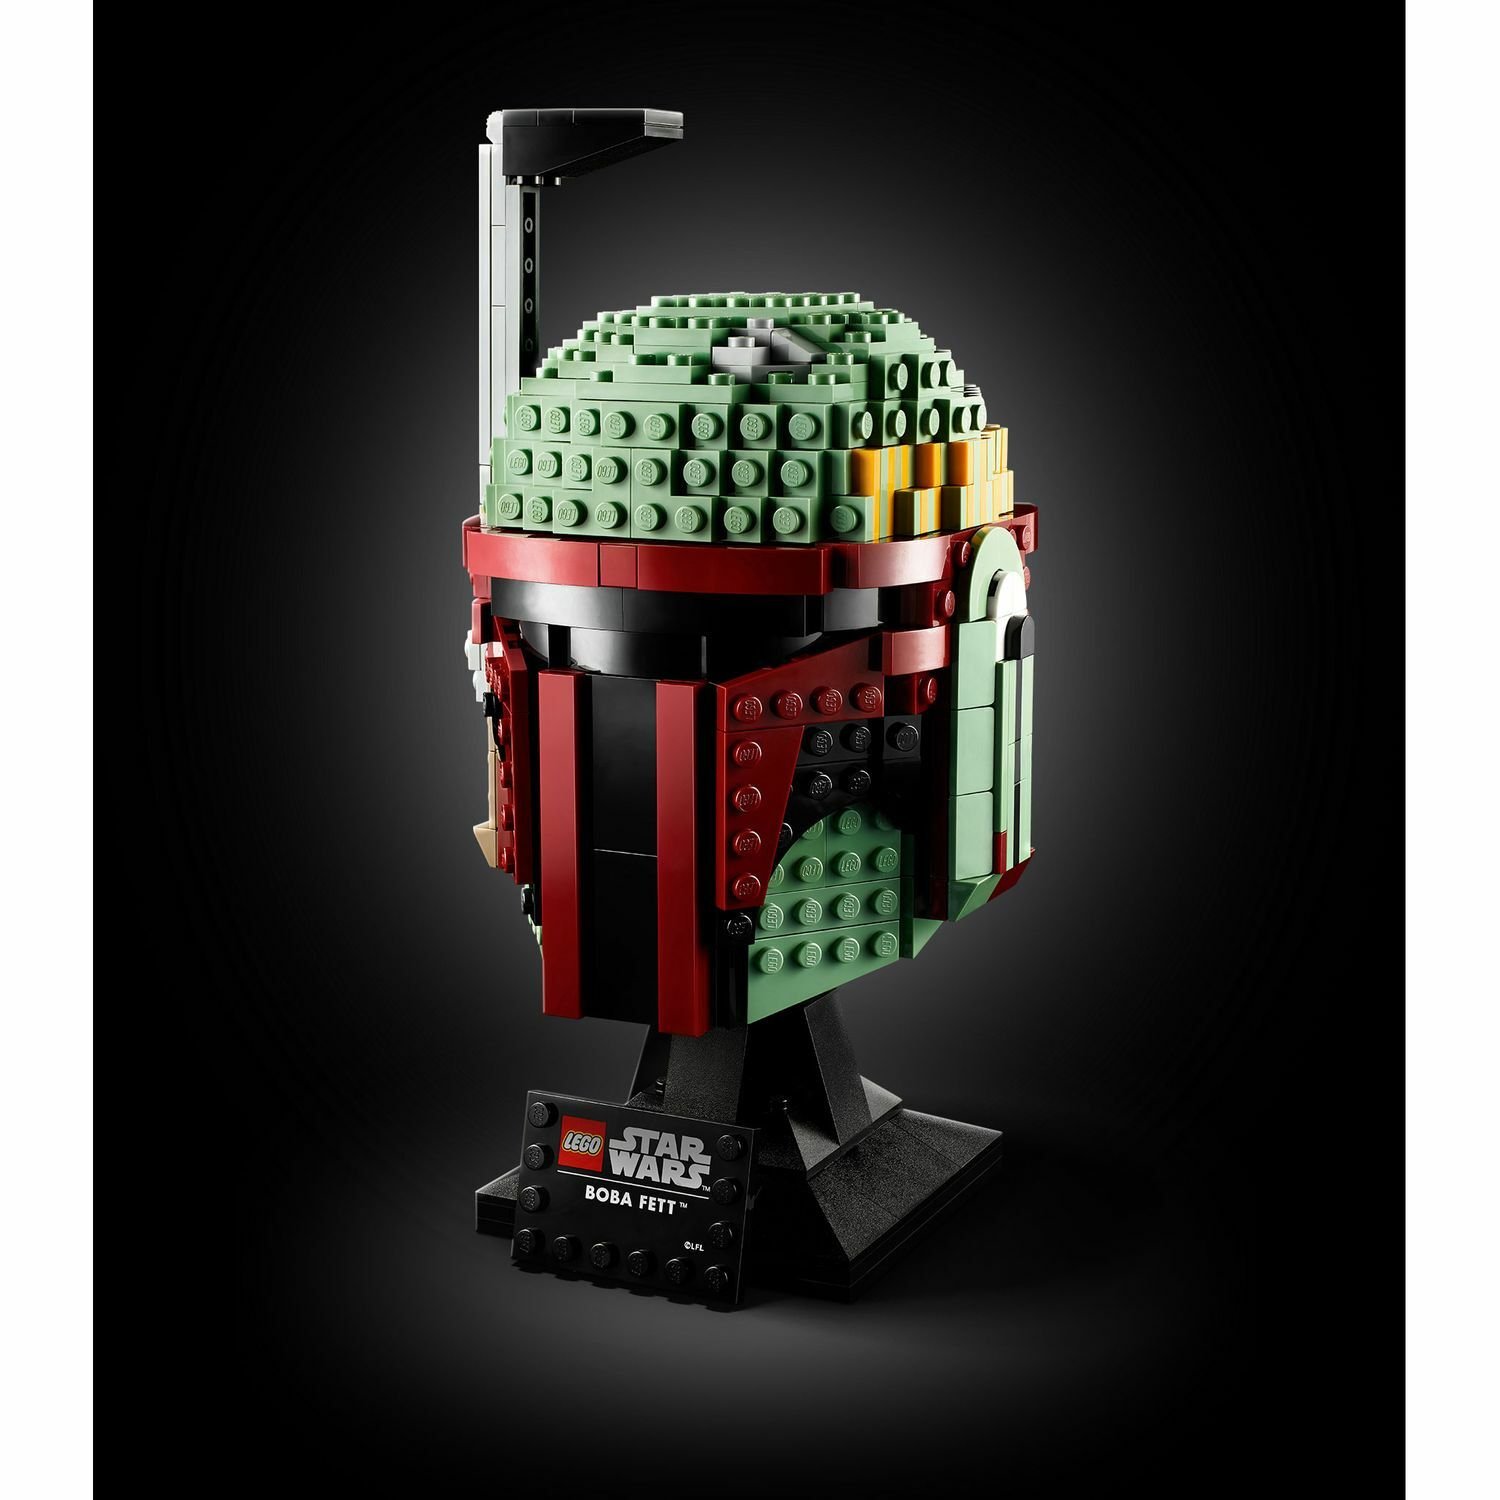 Lego Star Wars 75277 Шлем Бобы Фетта